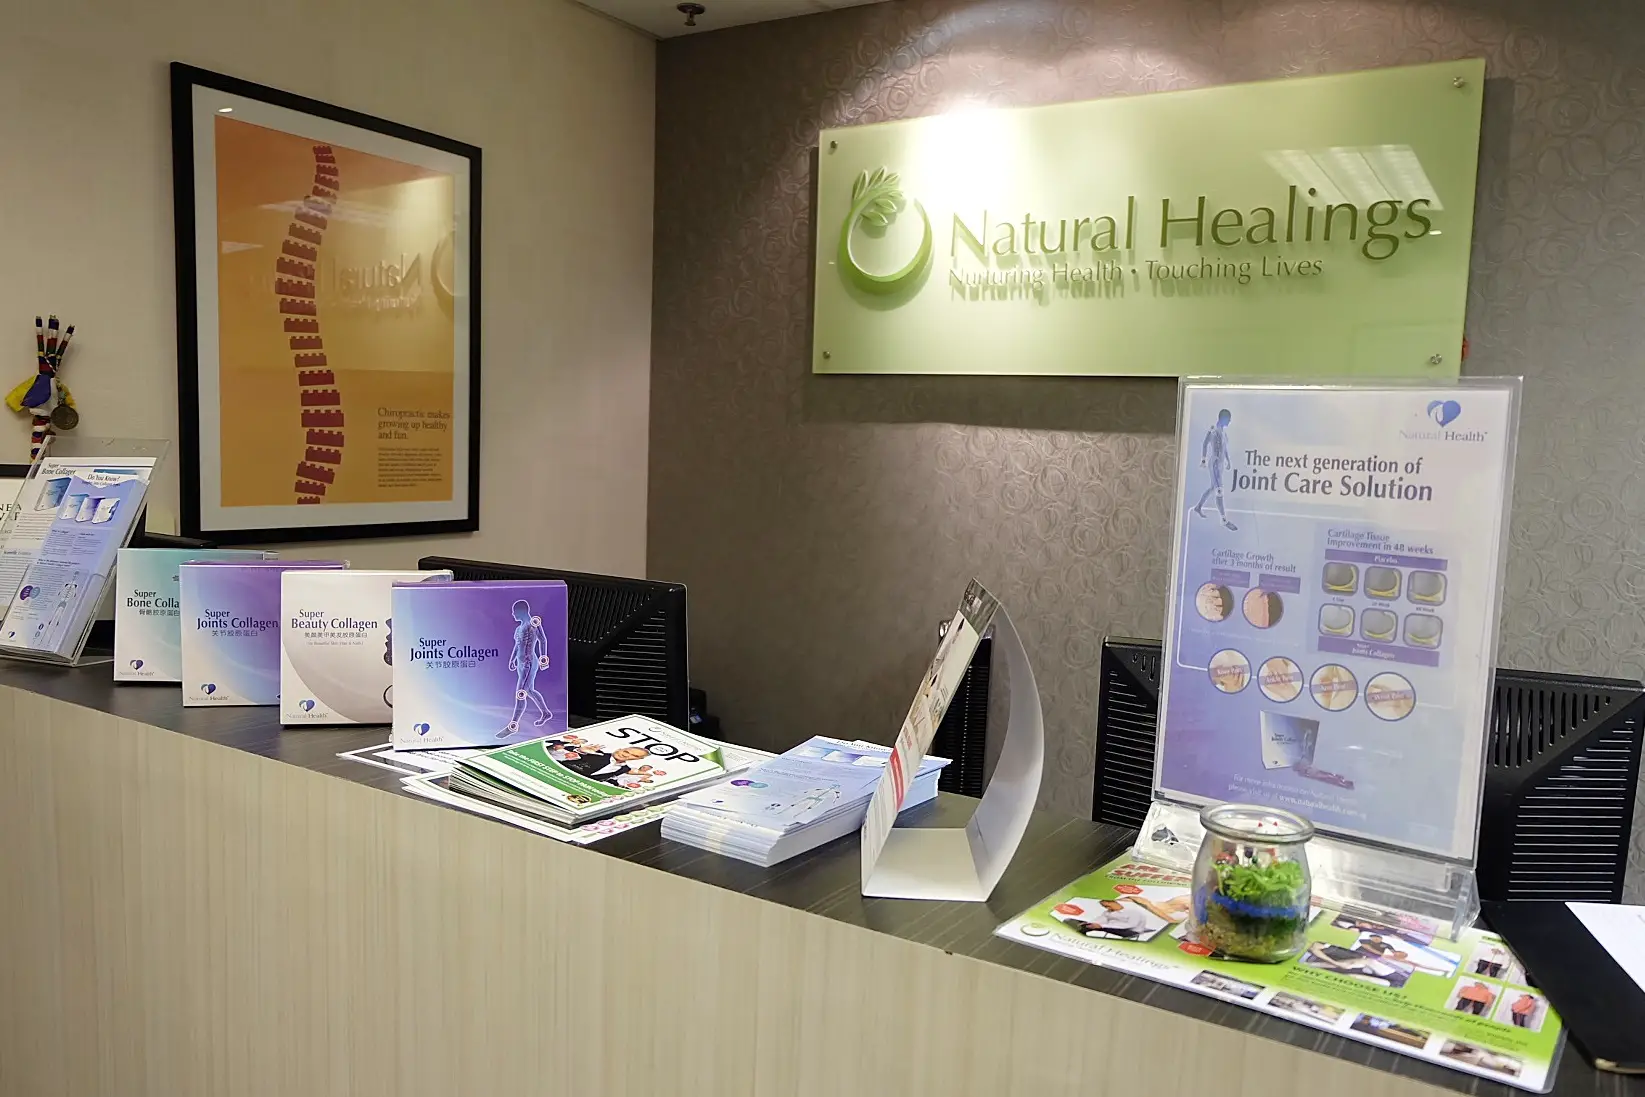  Natural Healings Chiropractor -Chiropractor Singapore  